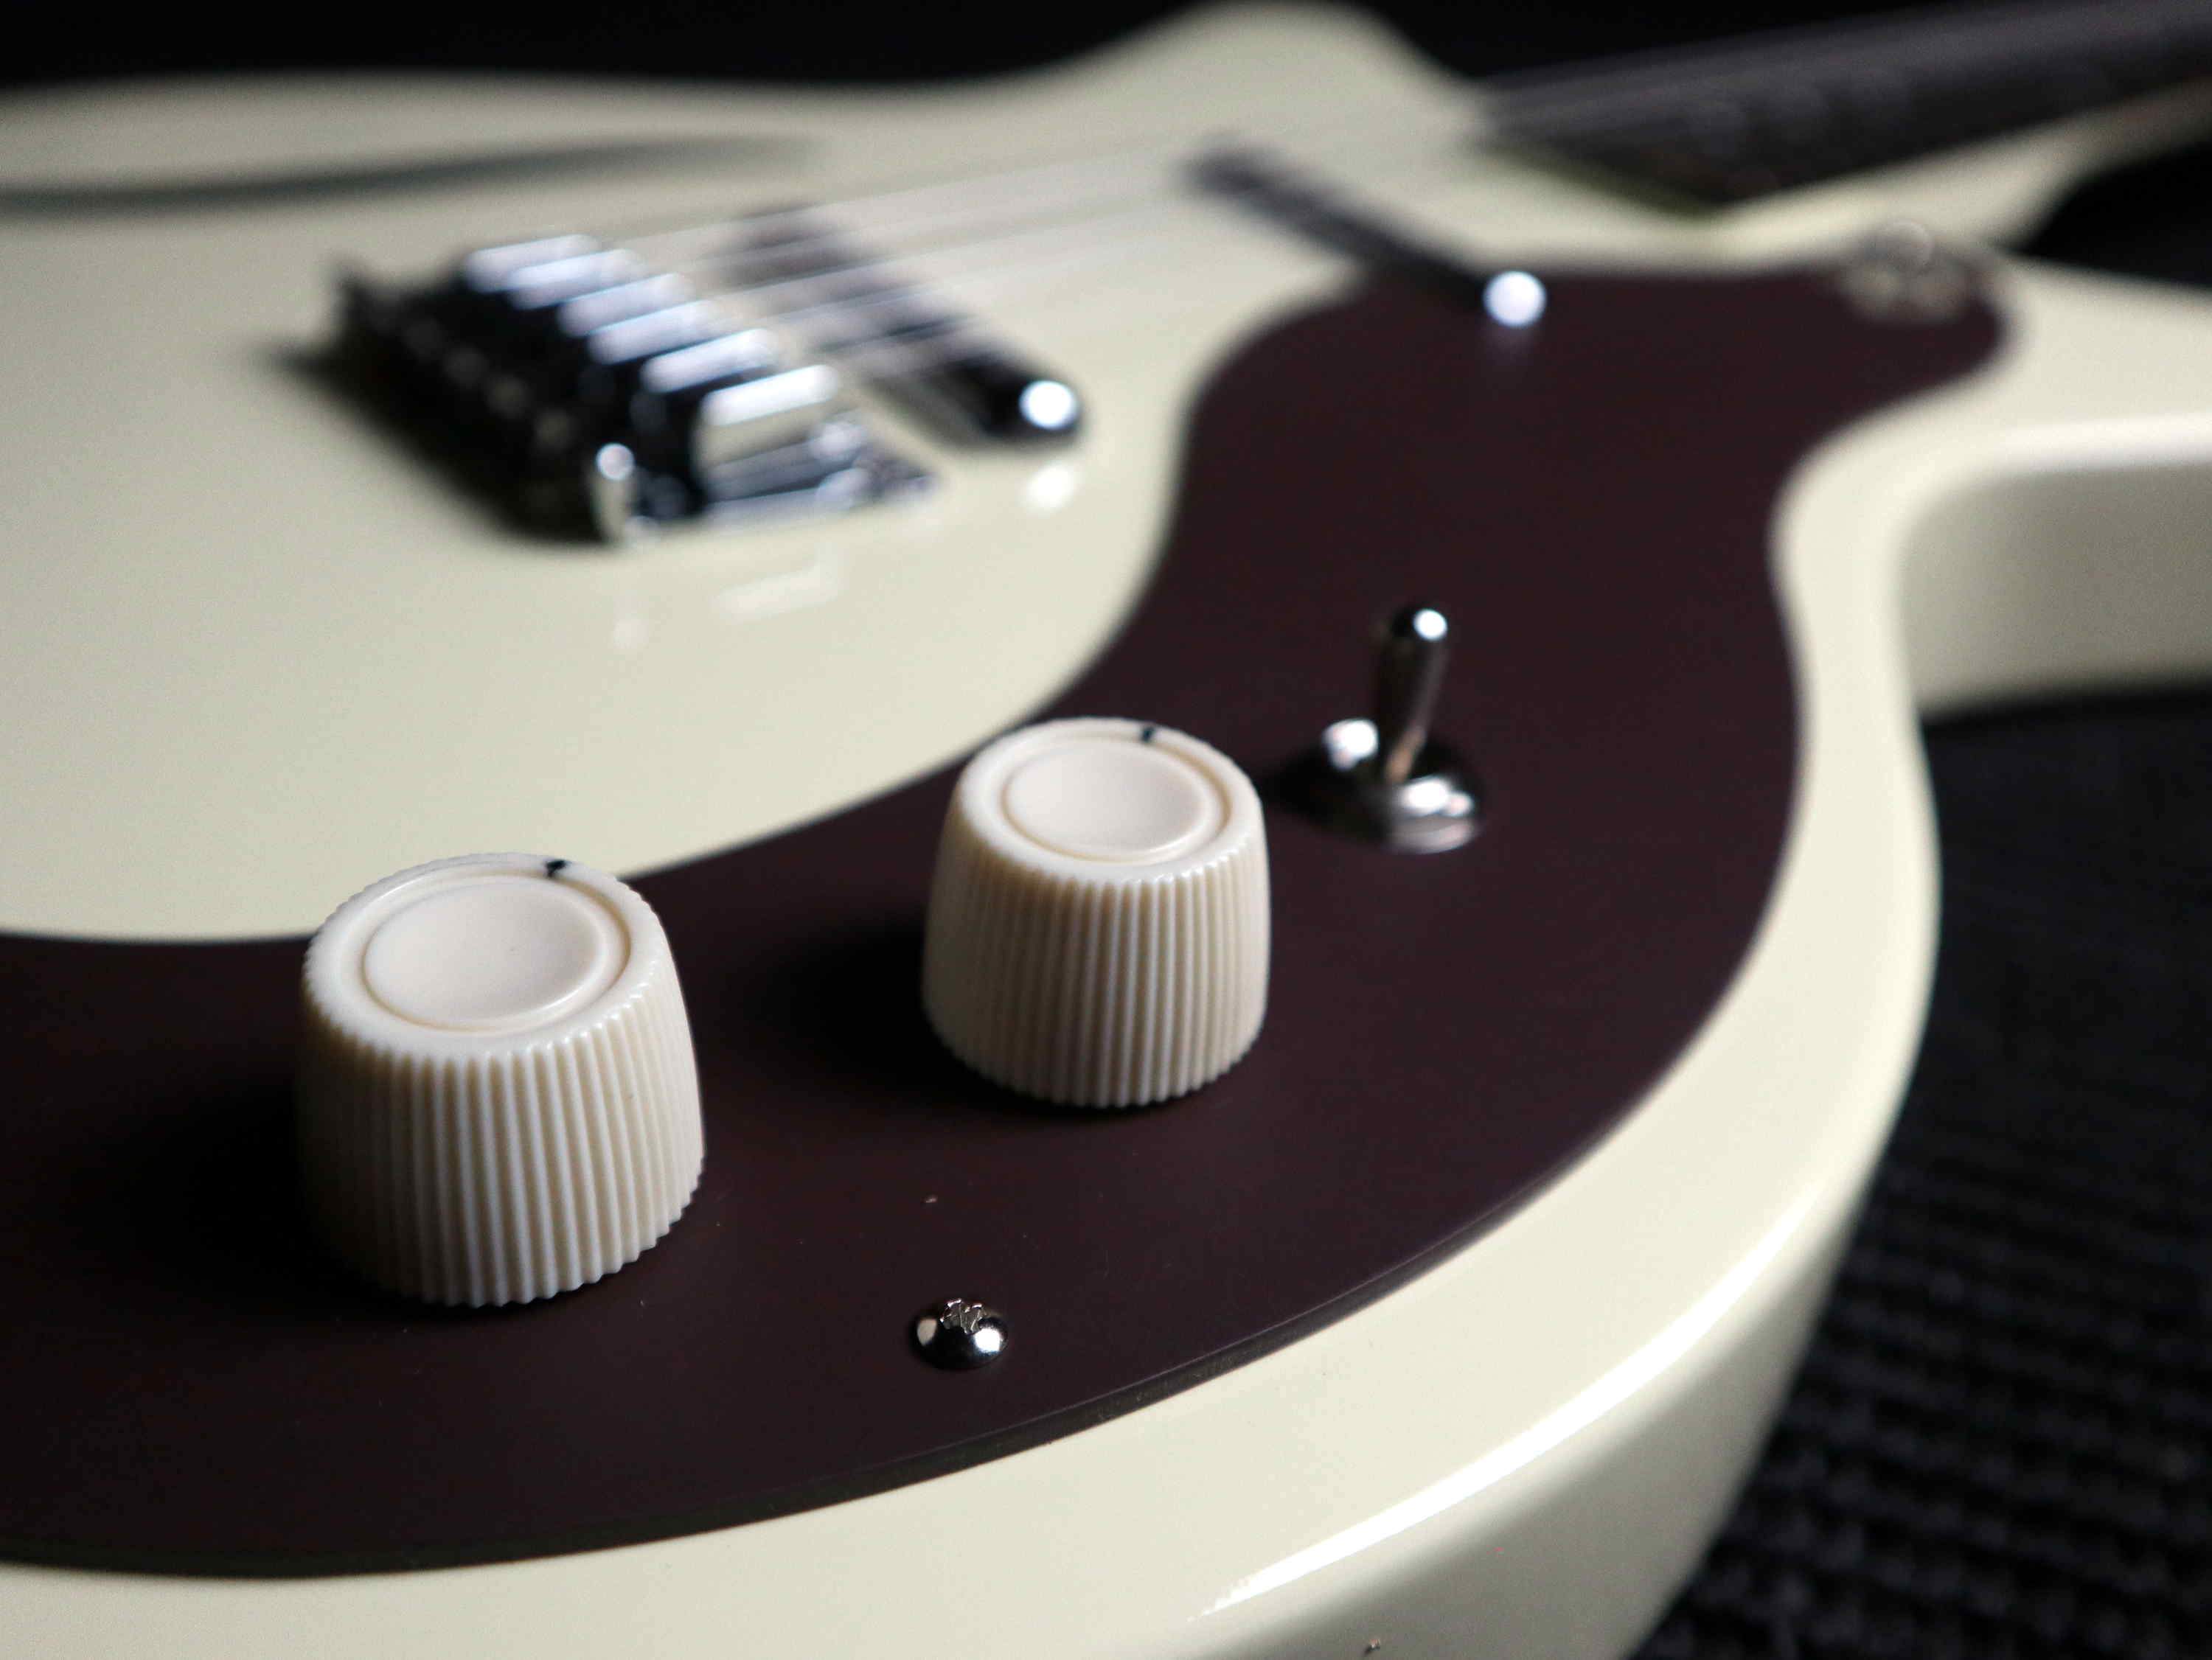 Danelectro Vintage 12 Sting Guitar ~ Vintage White, Electric Guitar for sale at Richards Guitars.